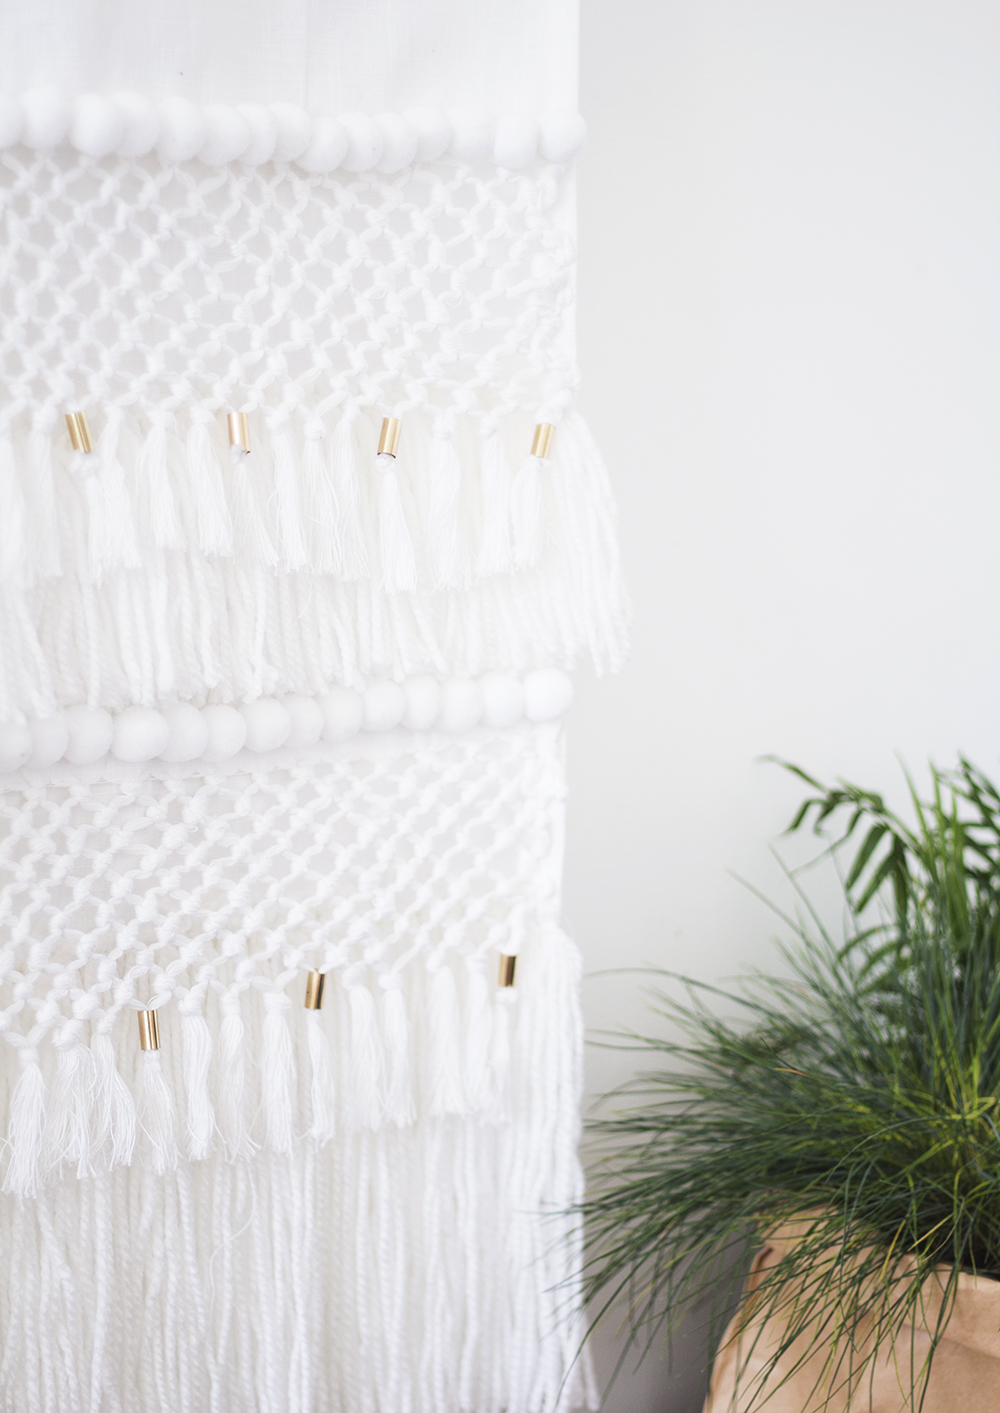 DIY-no-weave-wall-hanging